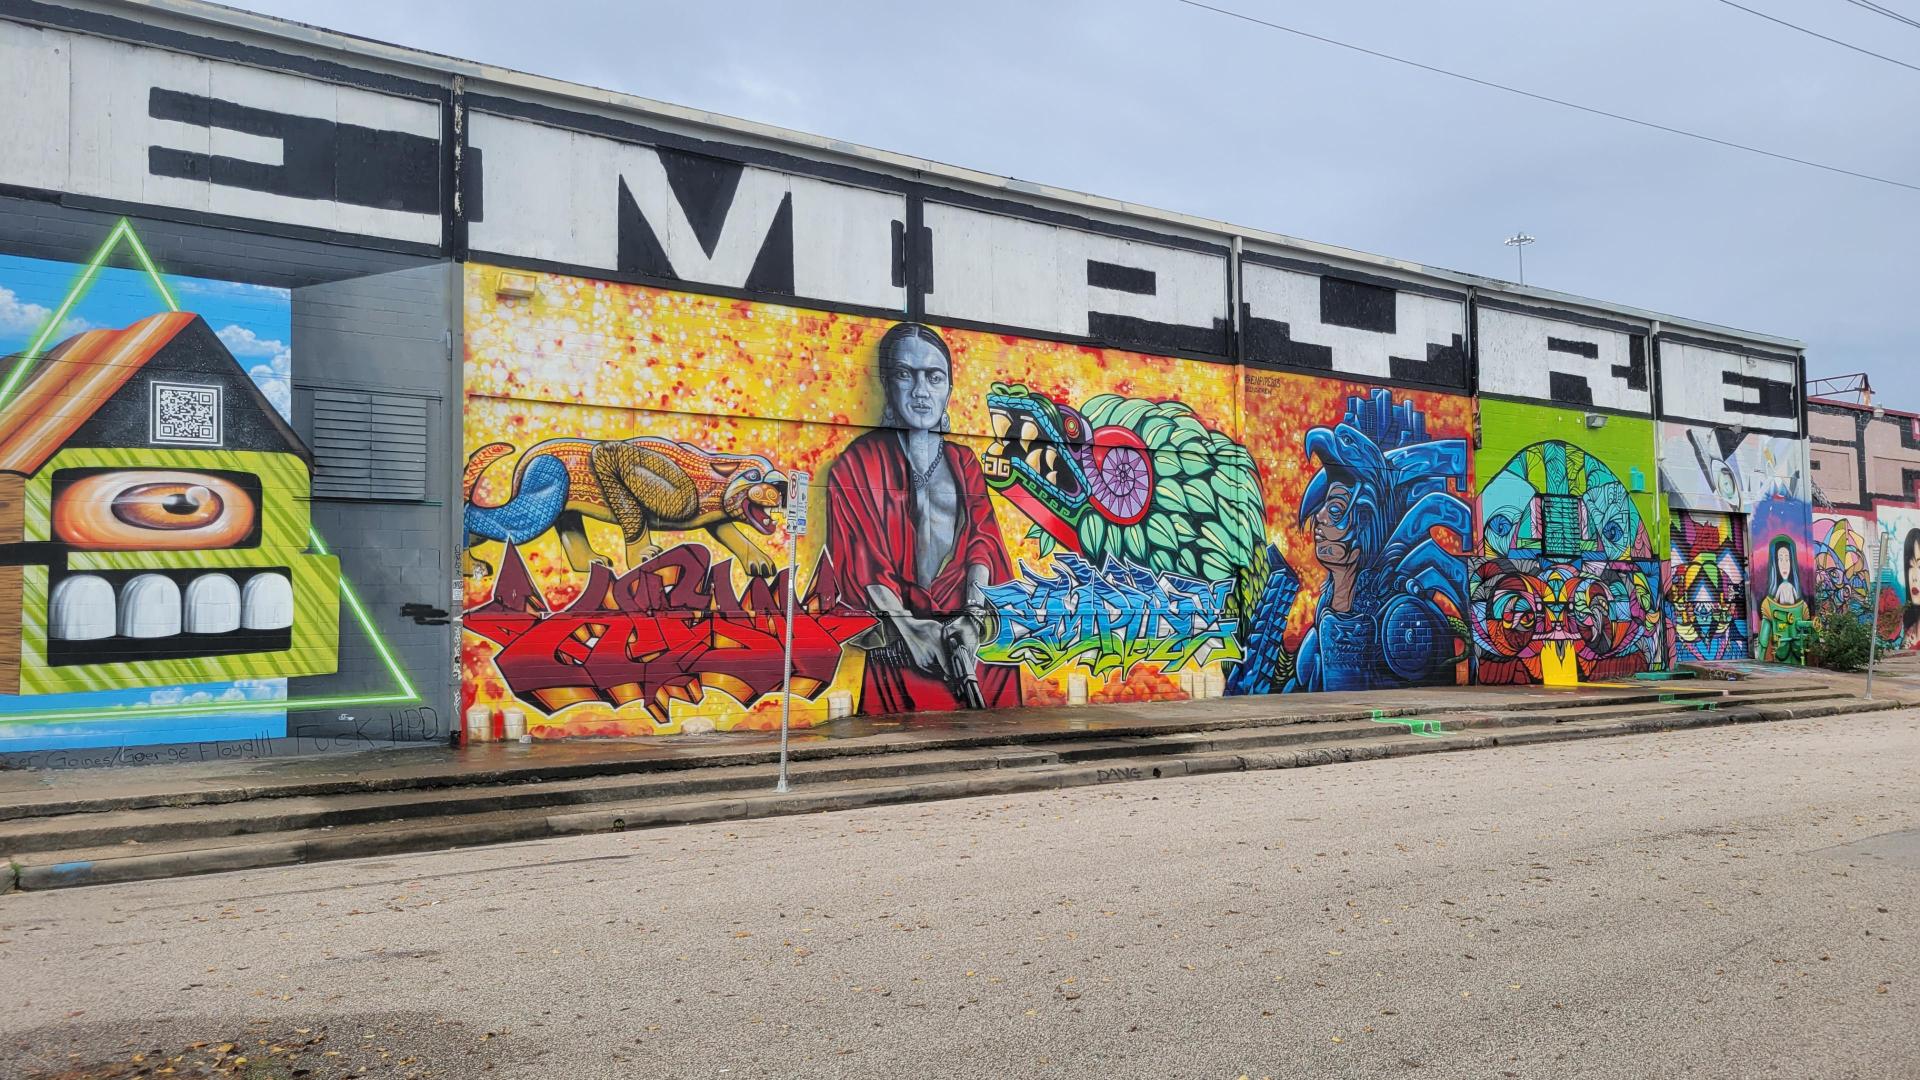 Houston's graffiti park located on Leeland Street